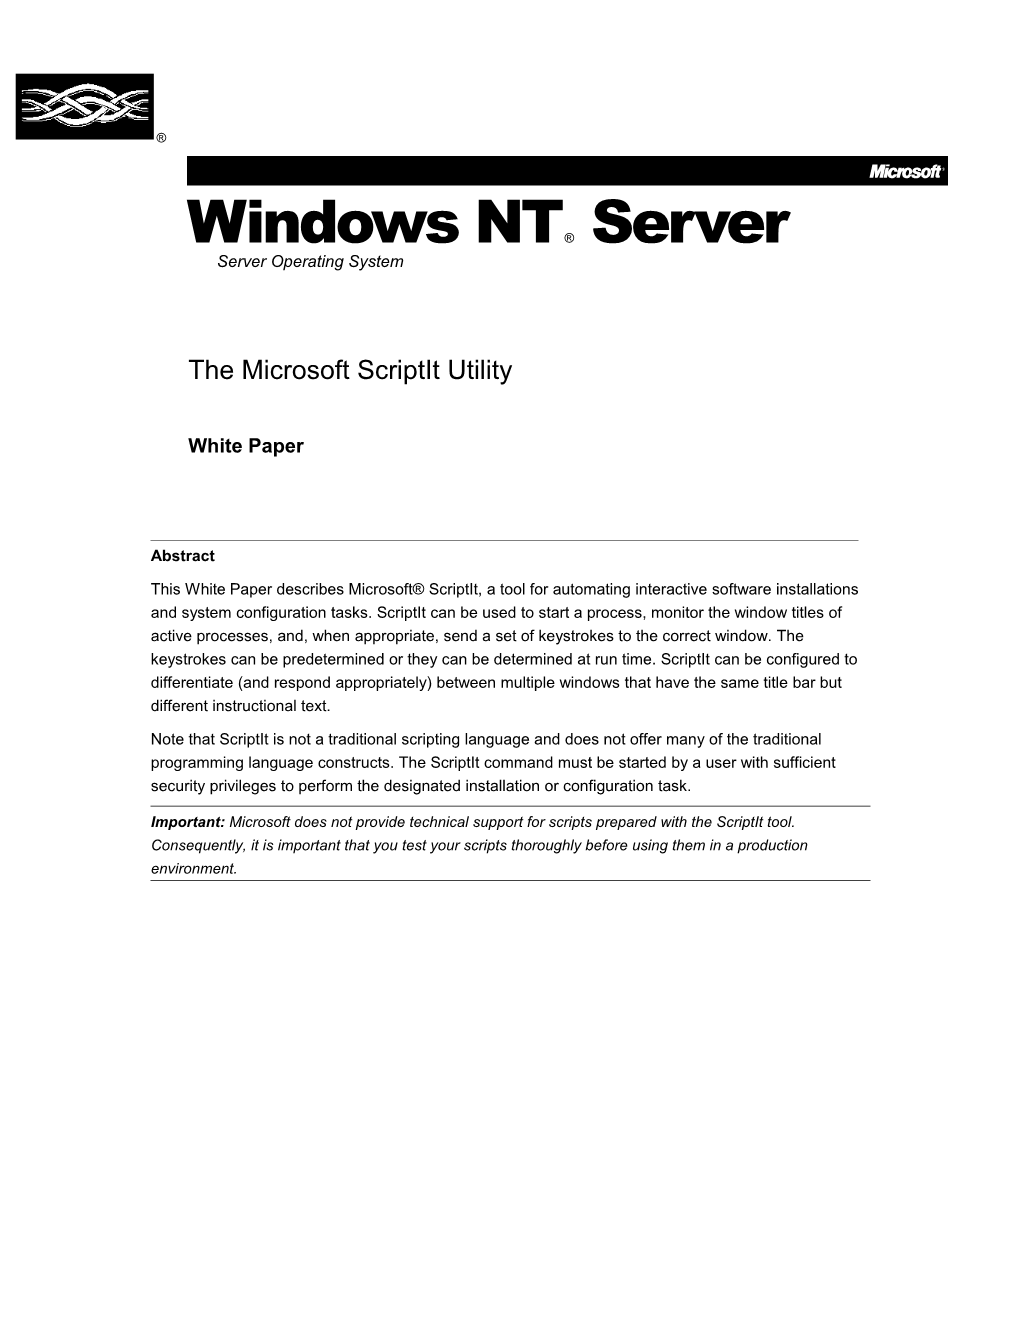 The Microsoft Scriptit Utility